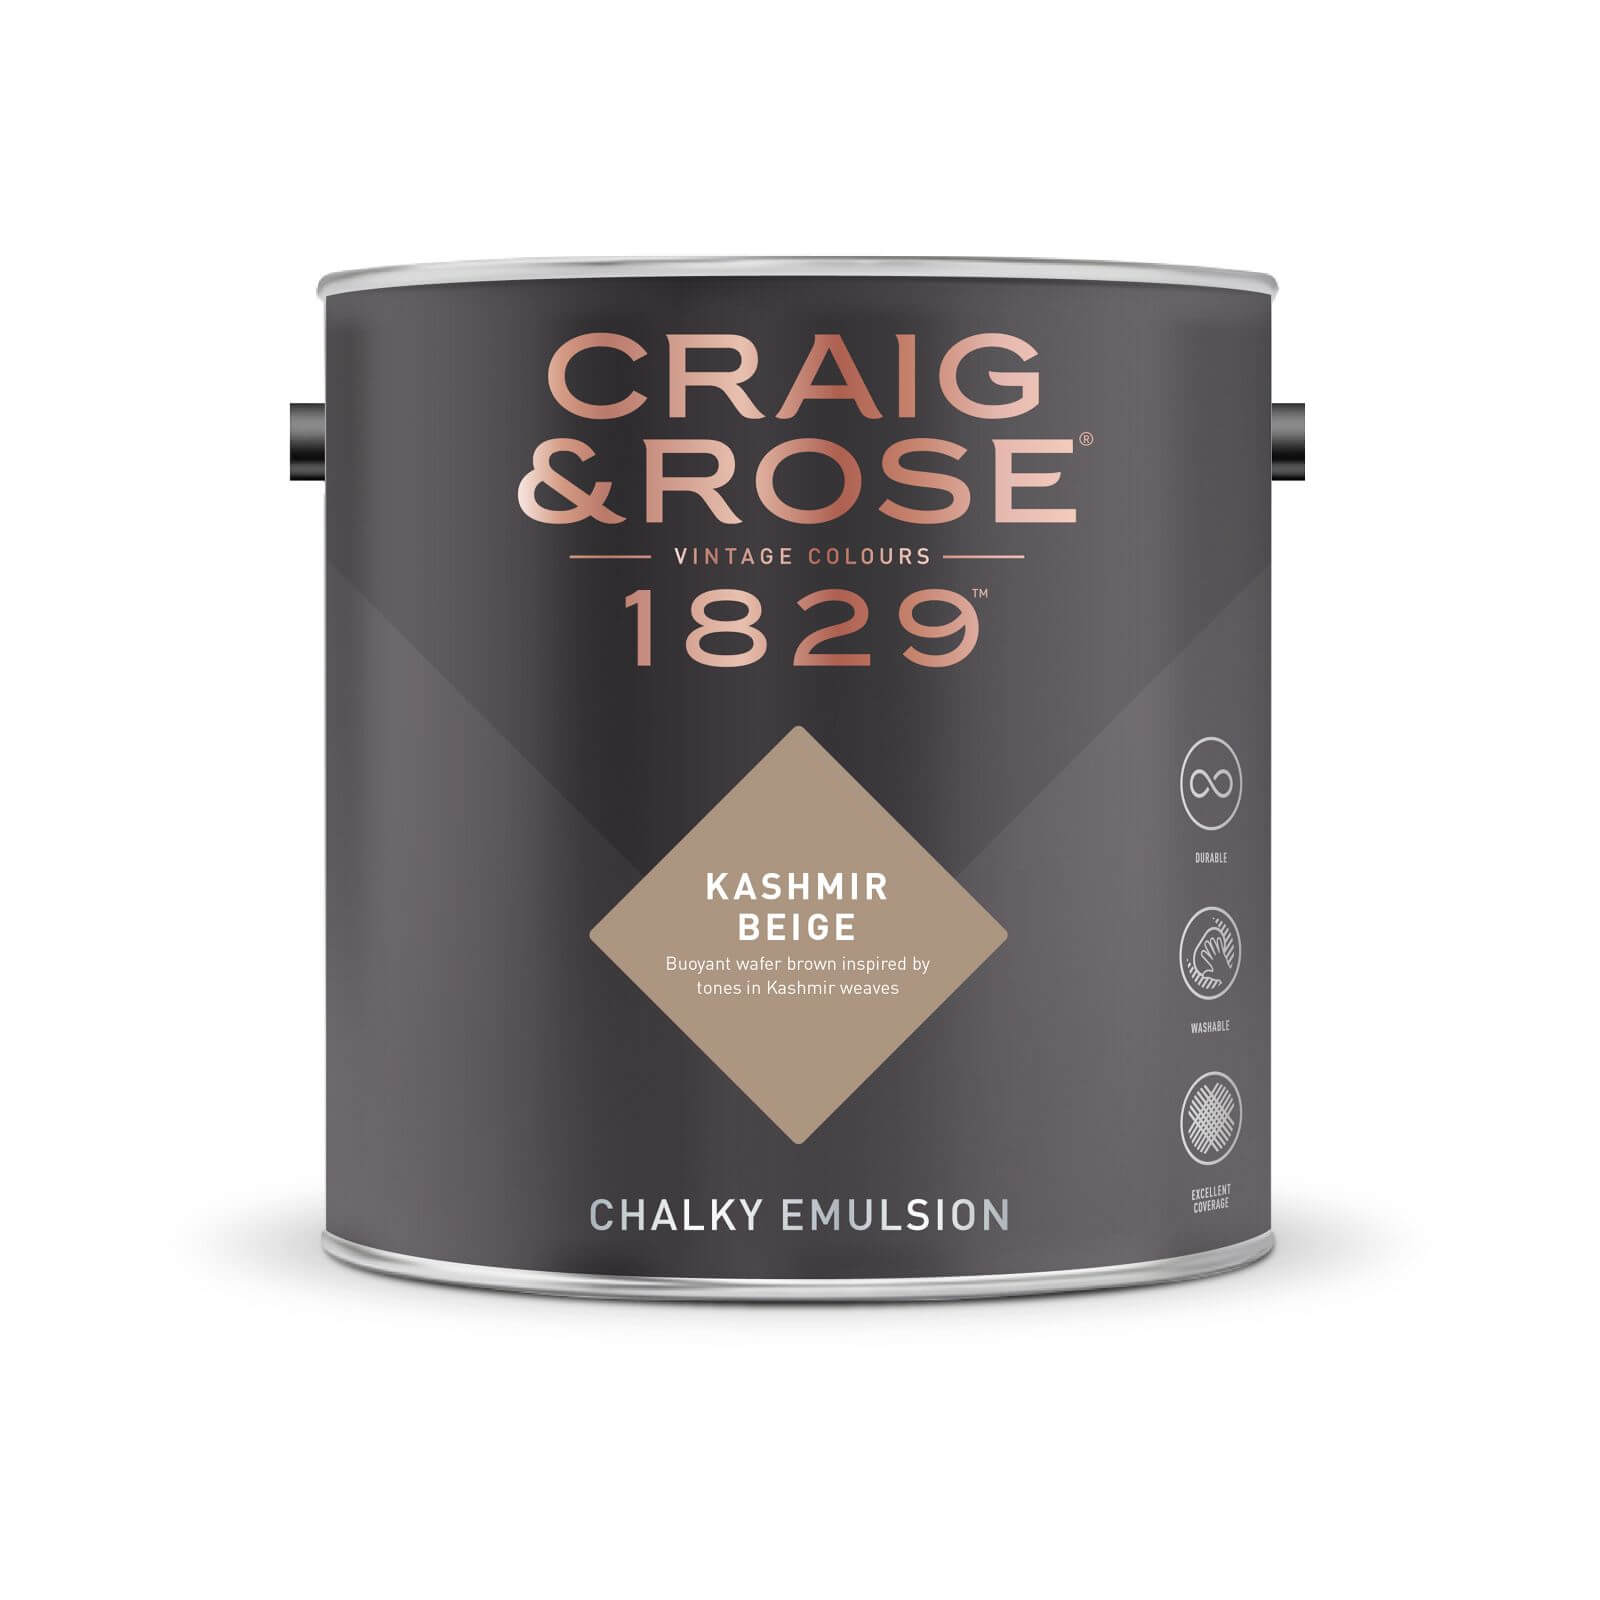 Craig & Rose 1829 Chalky Emulsion Paint Kashmir Beige - Tester 50ml